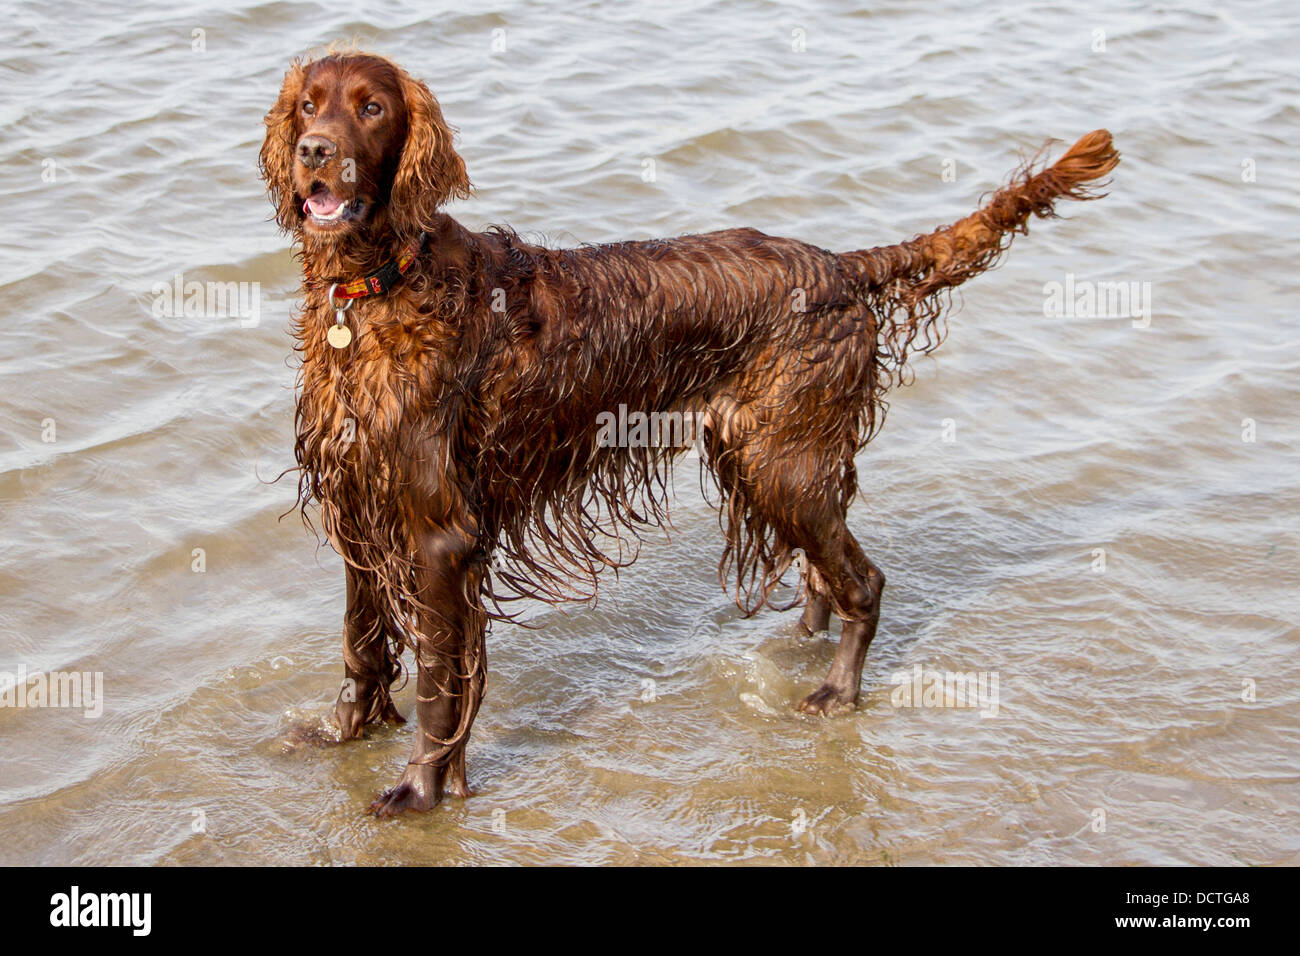 Irish setter dog standing in water on 